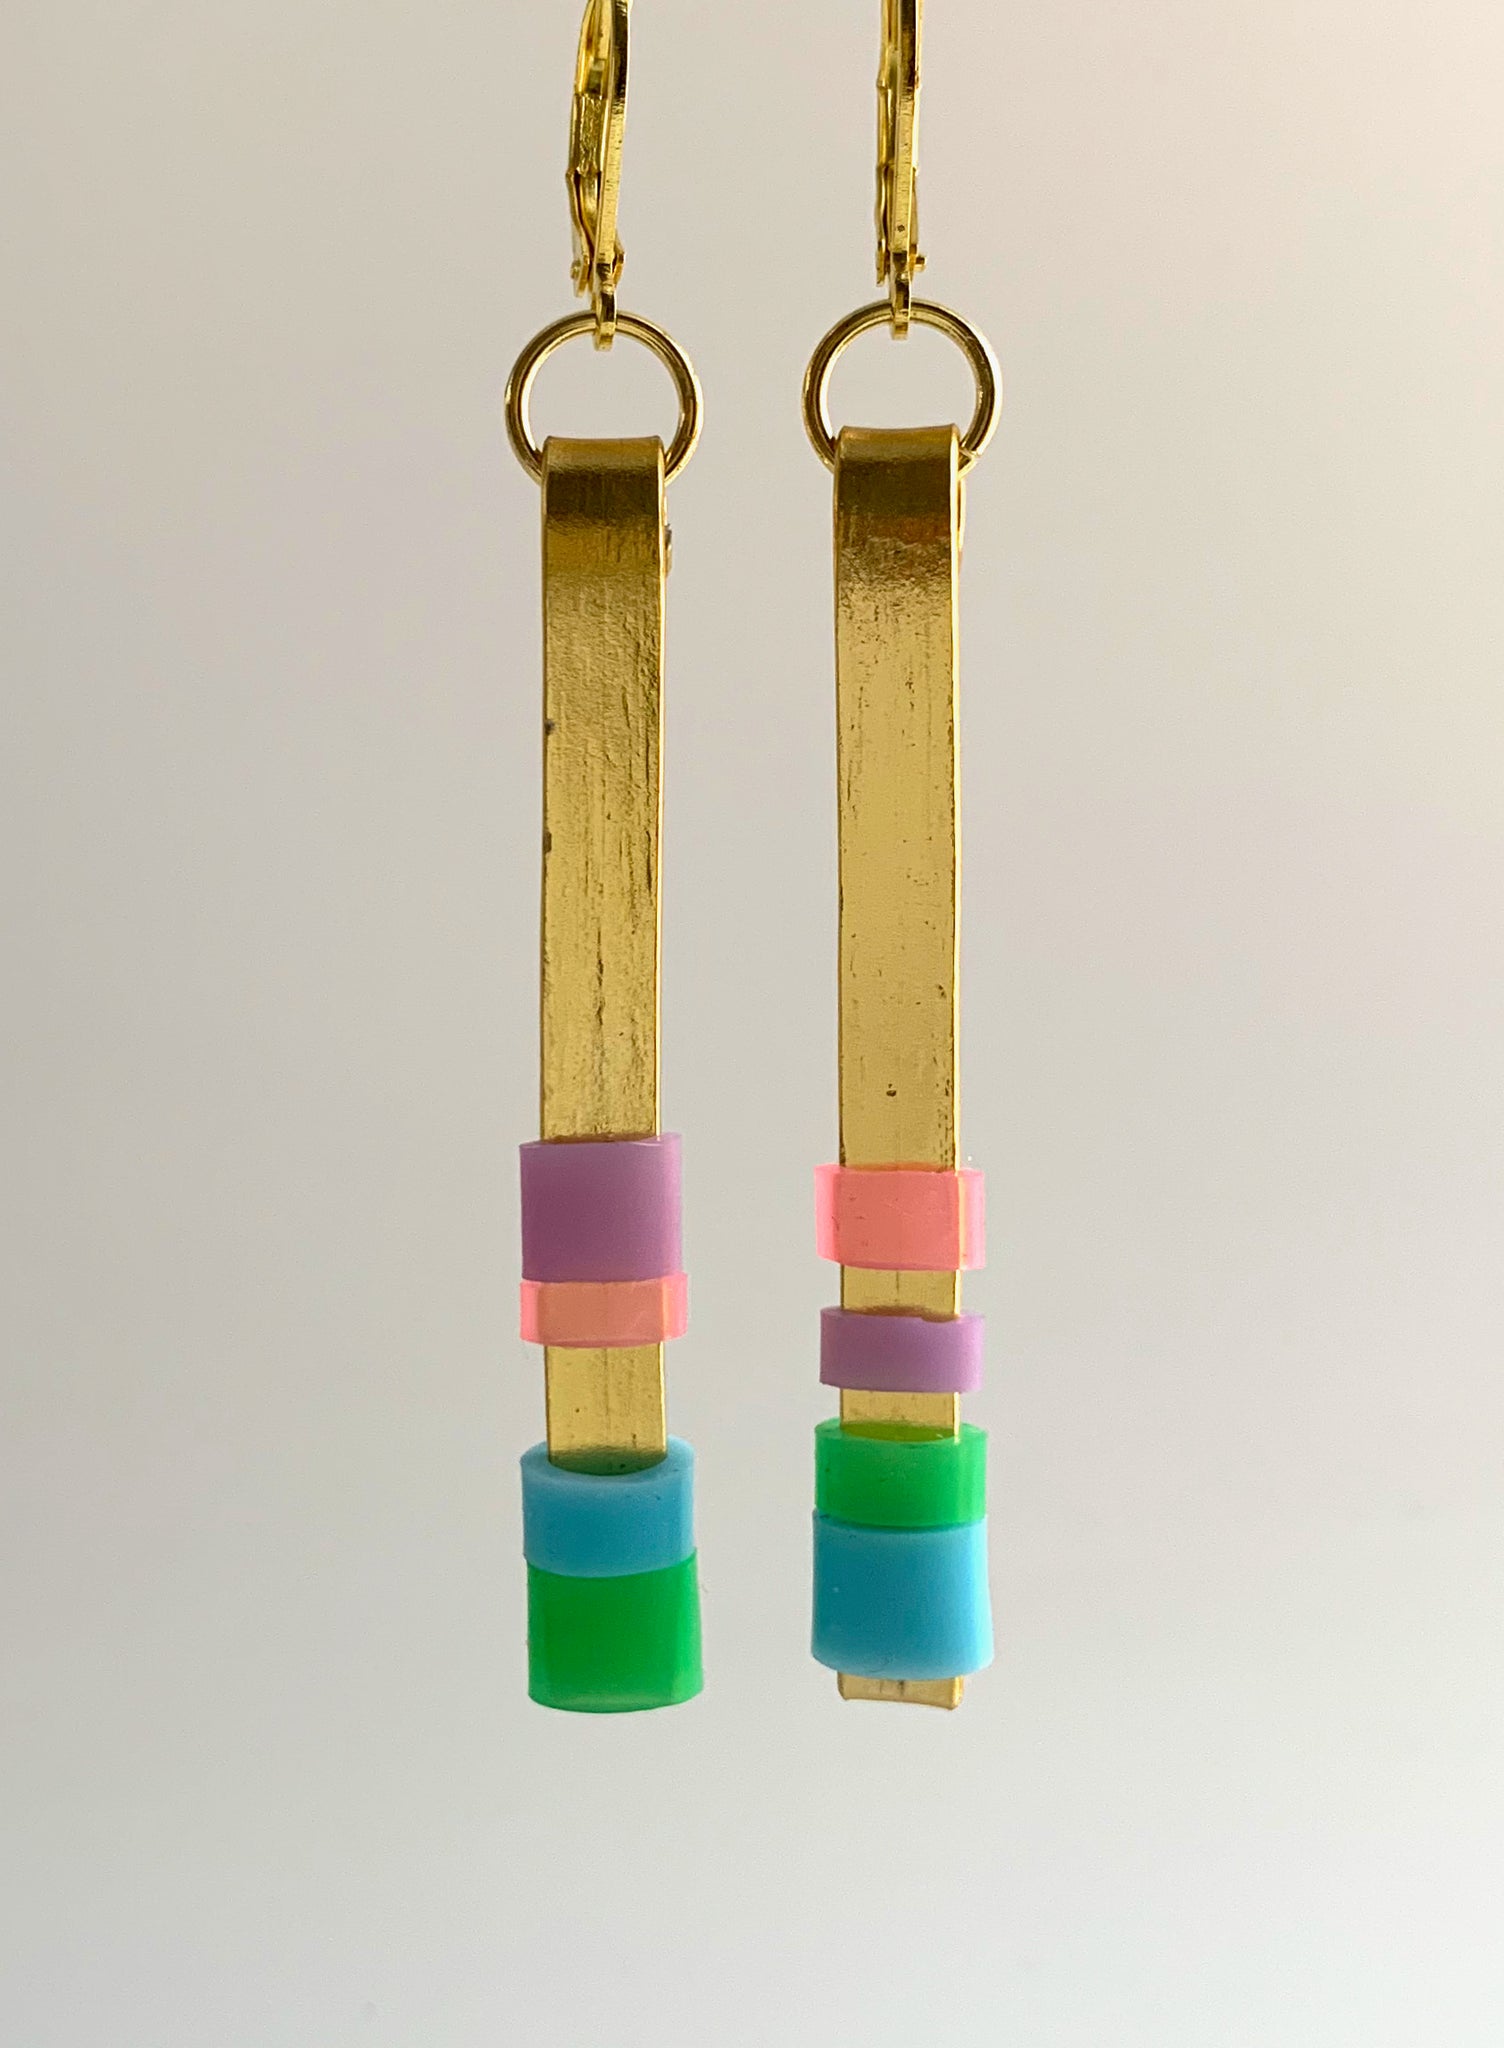 Matchstick Earrings in Gold, pink, lavender, light blue+green